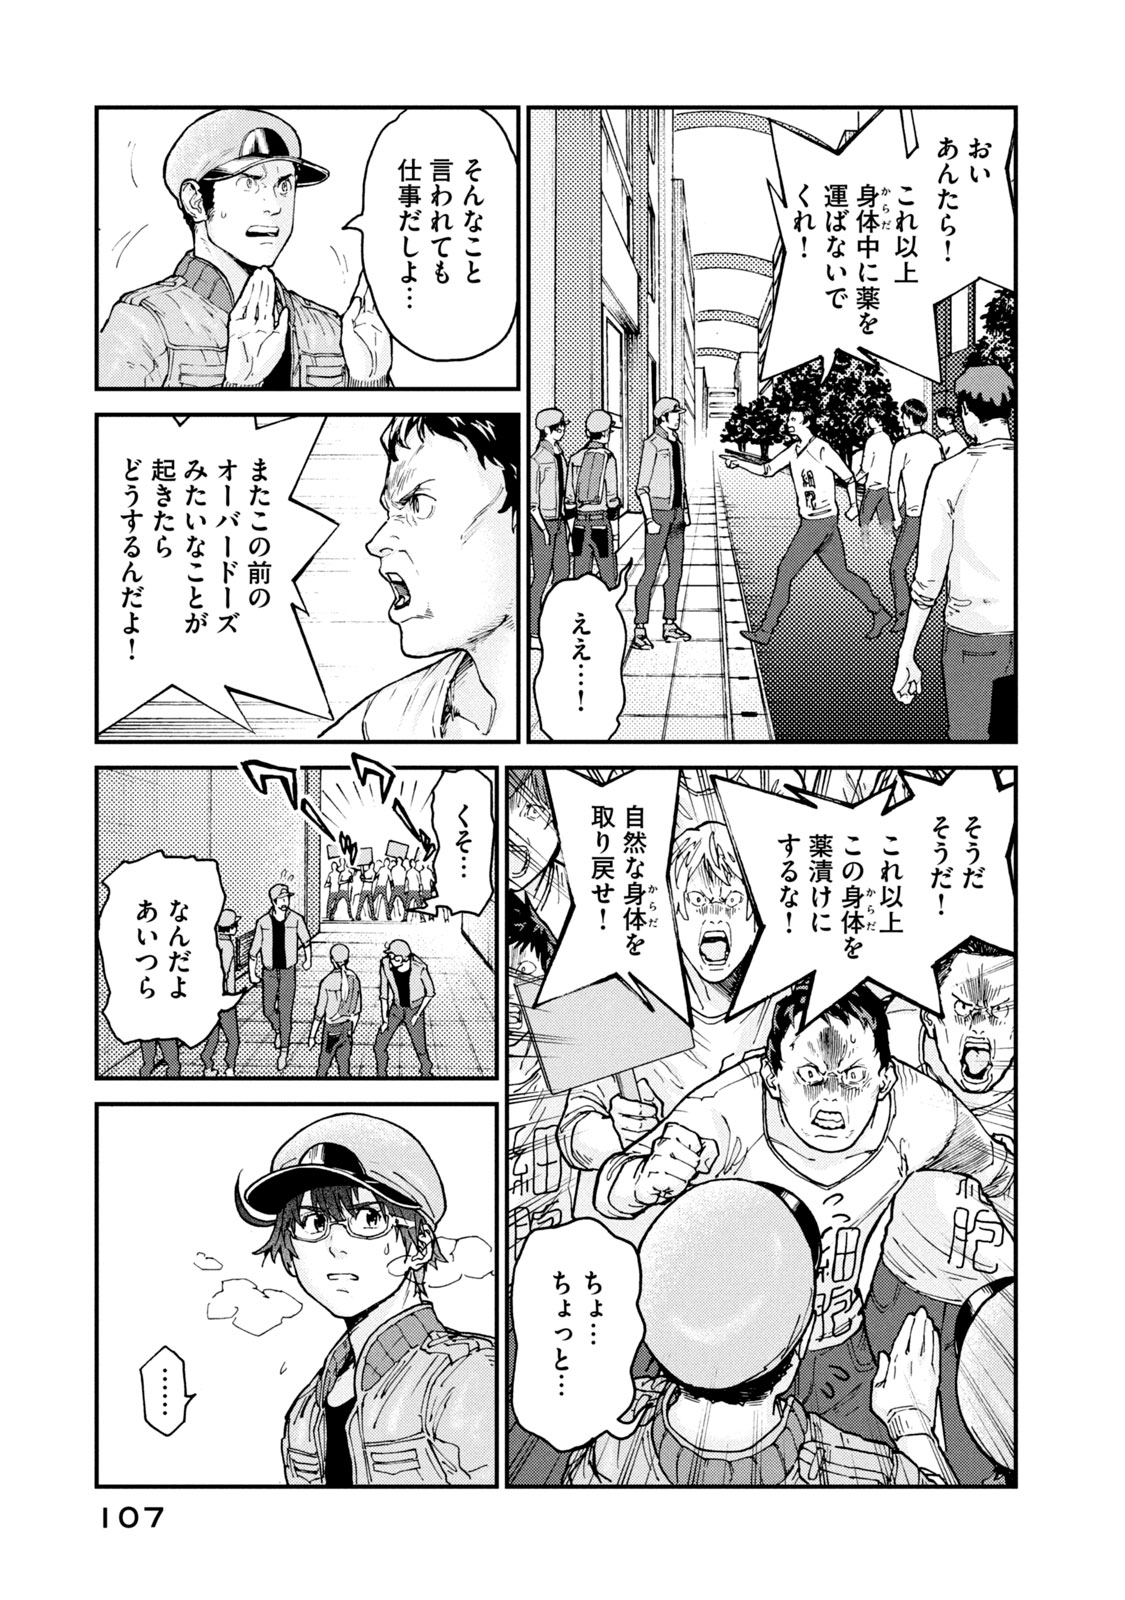 Hataraku Saibou BLACK - Chapter 35 - Page 15